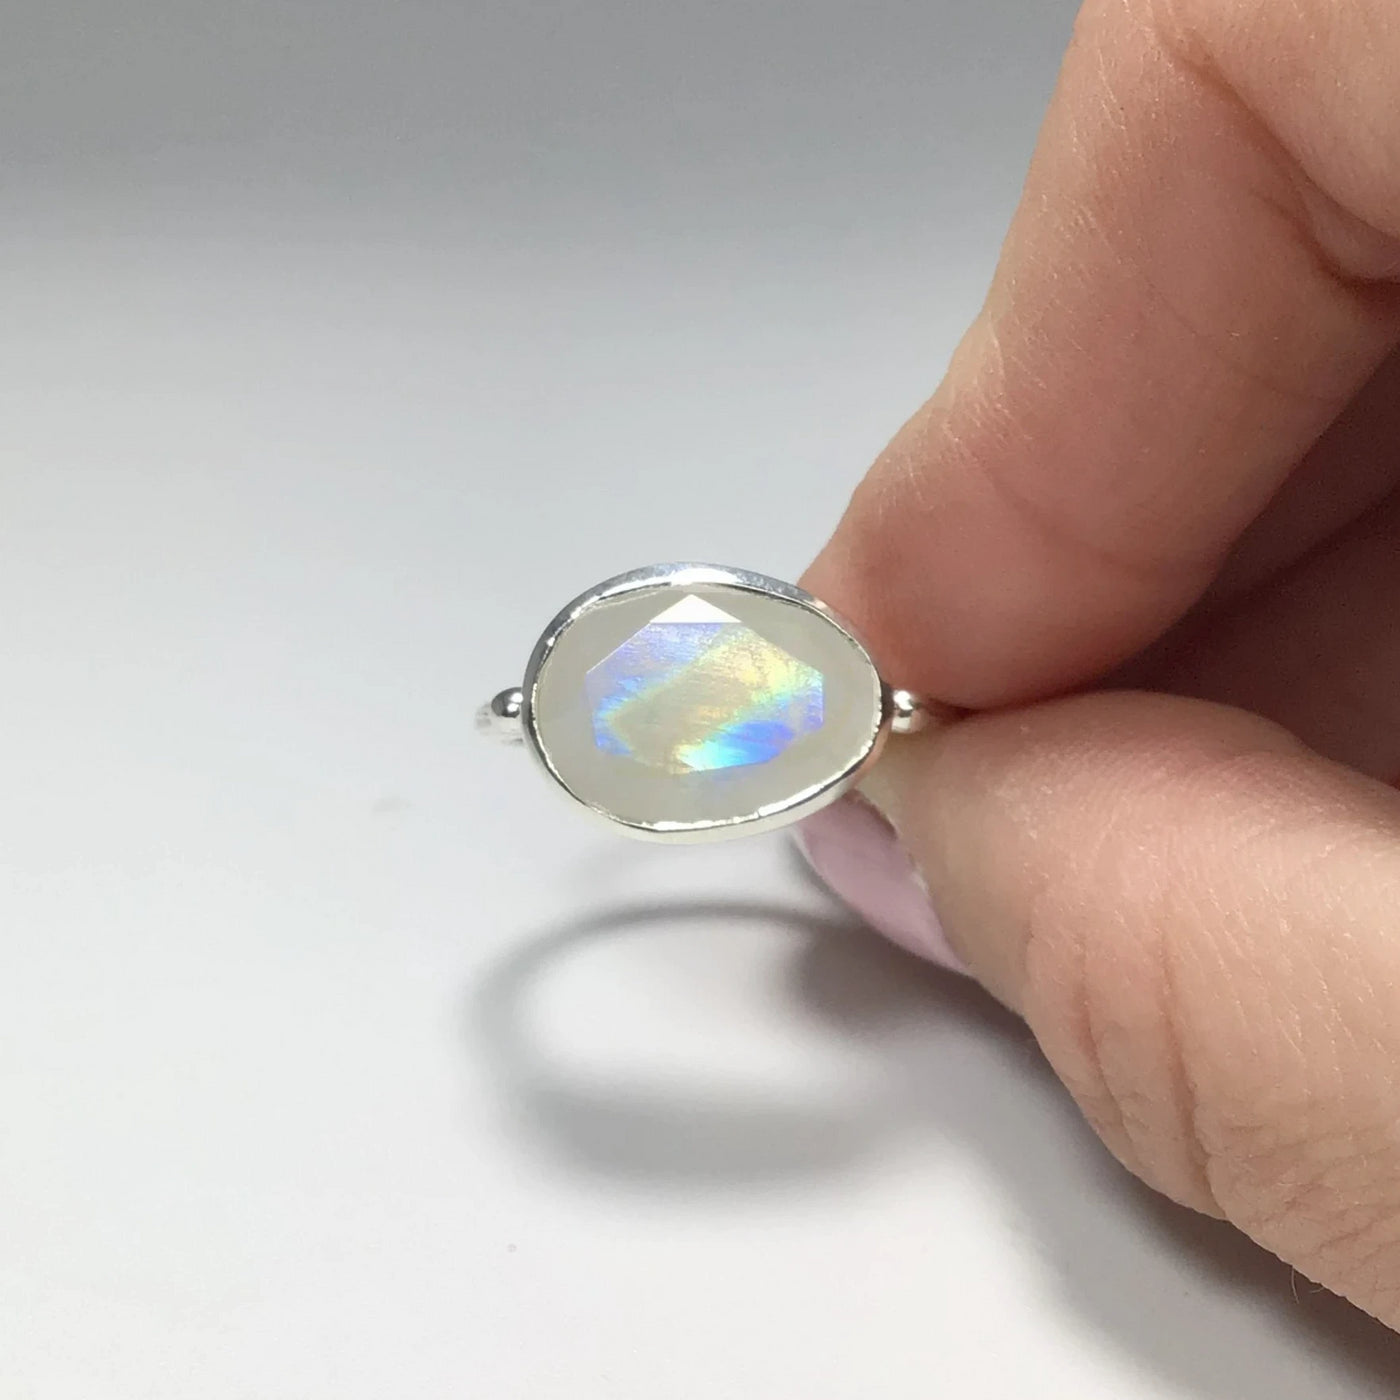 Rainbow Moonstone Ring - Size 9.25